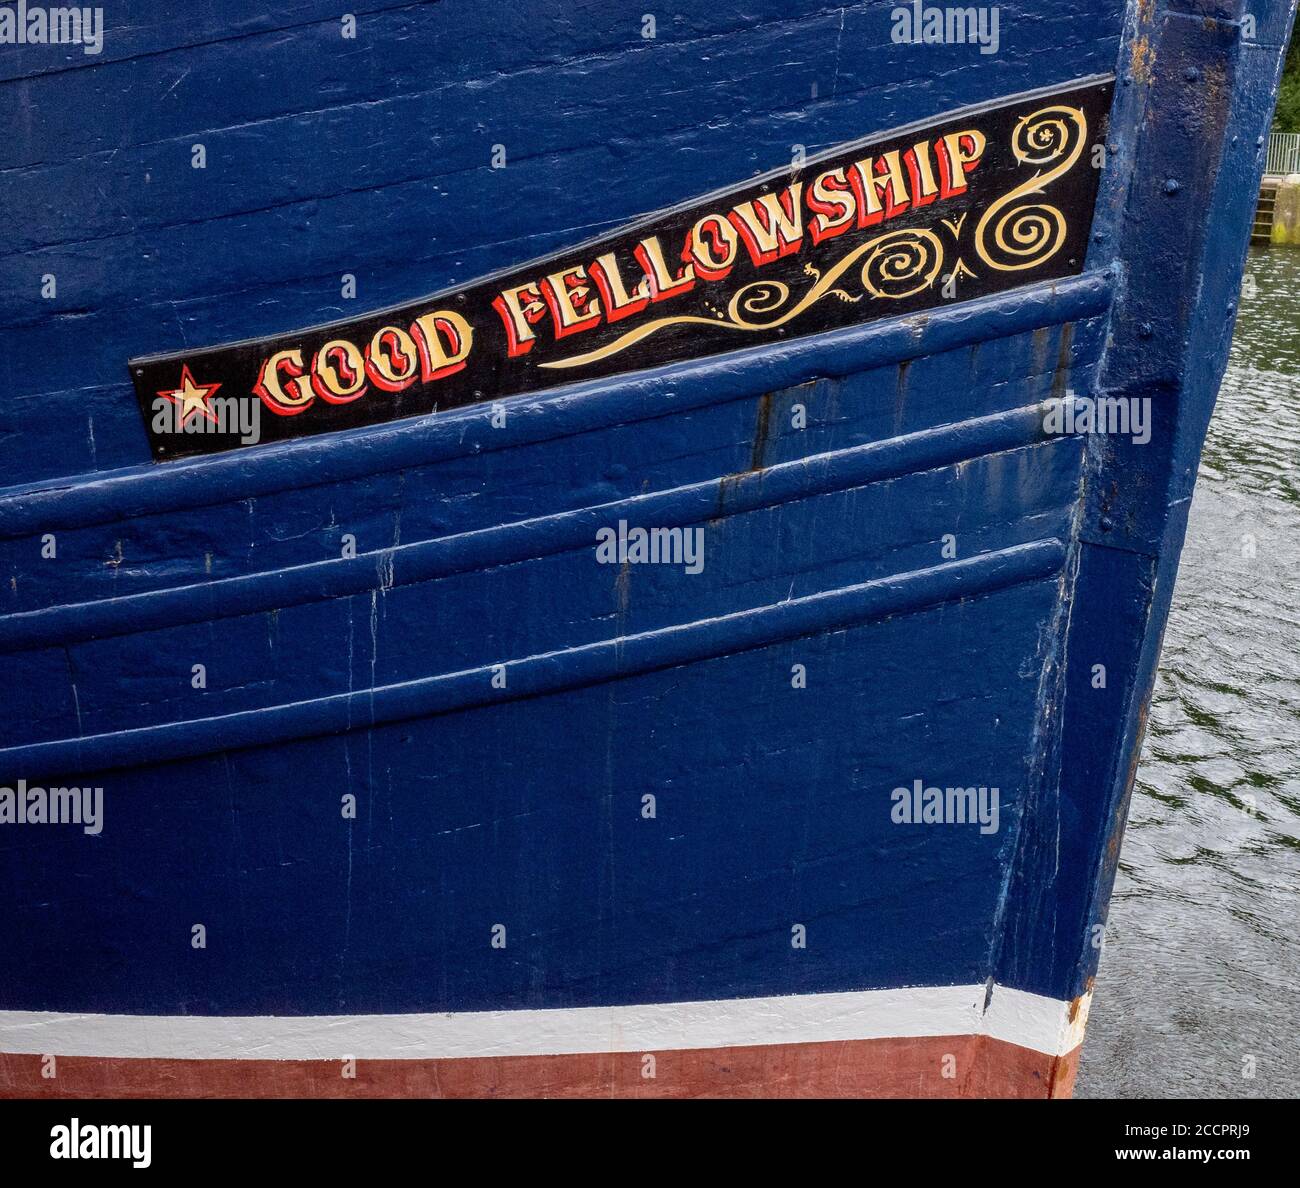 Good Fellowship, Fishing Boat in Eyemouth Harbour, Scottish Borders, Scotland, UK. Stock Photo